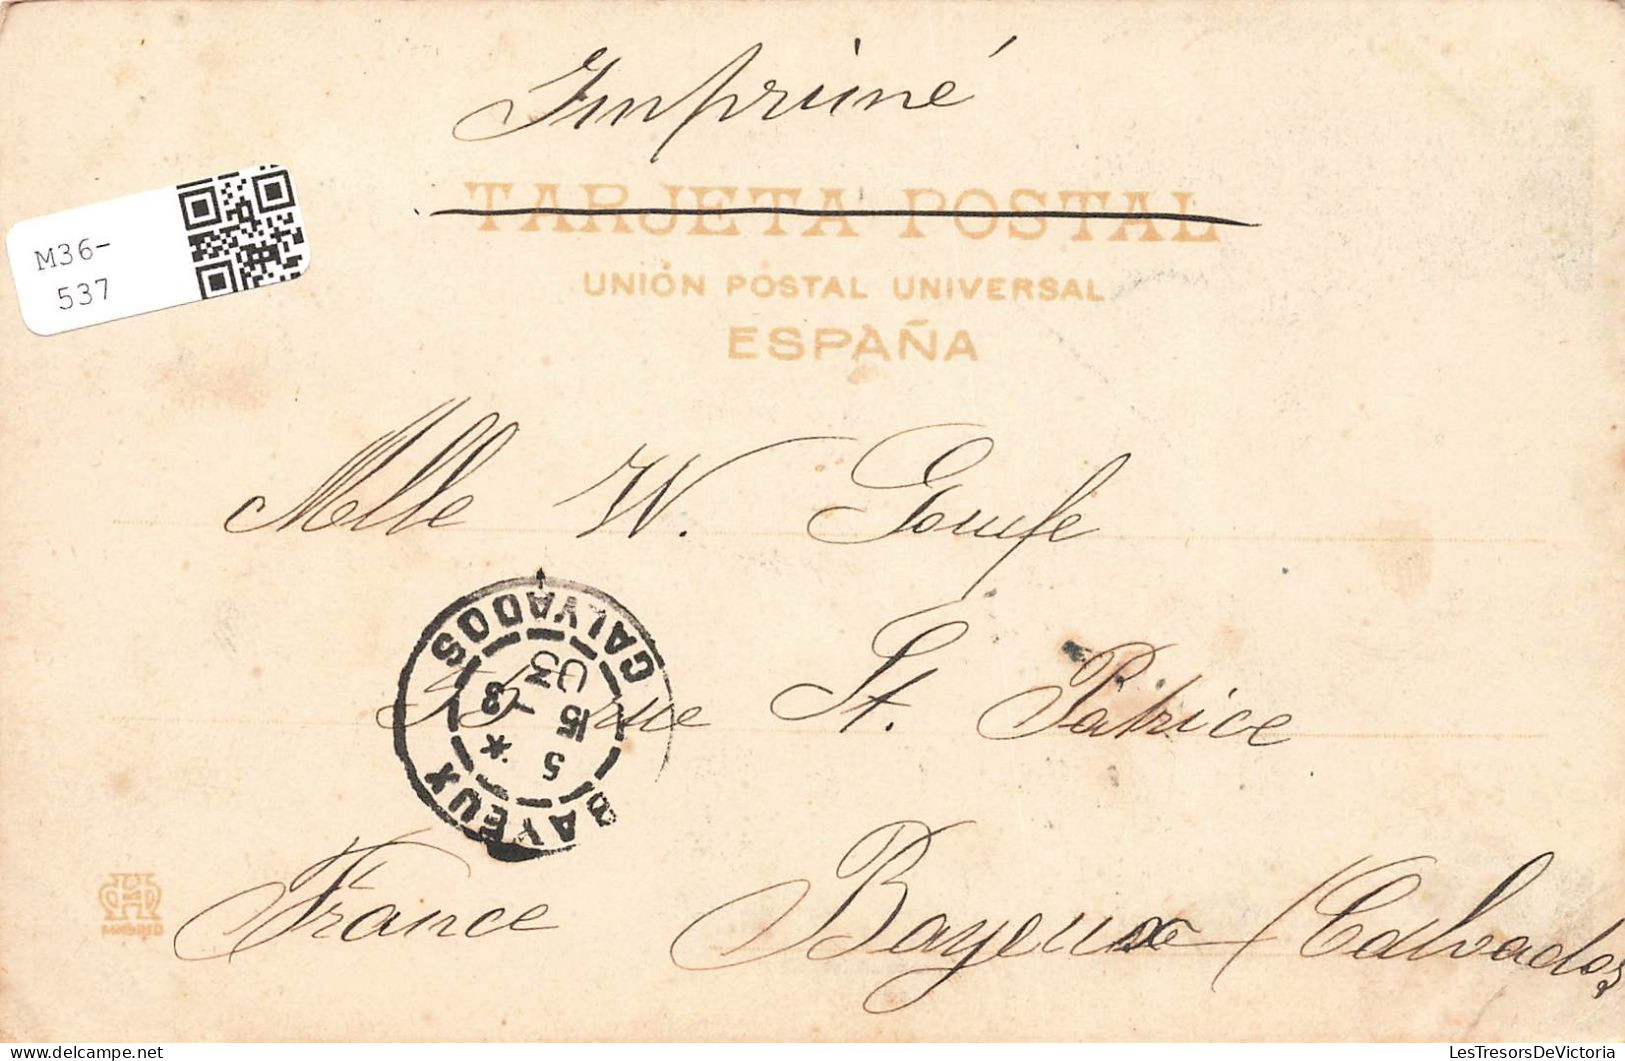 ESPAGNE - Valencia - Torre De Cuarté - Animé - Carte Postale Ancienne - Valencia